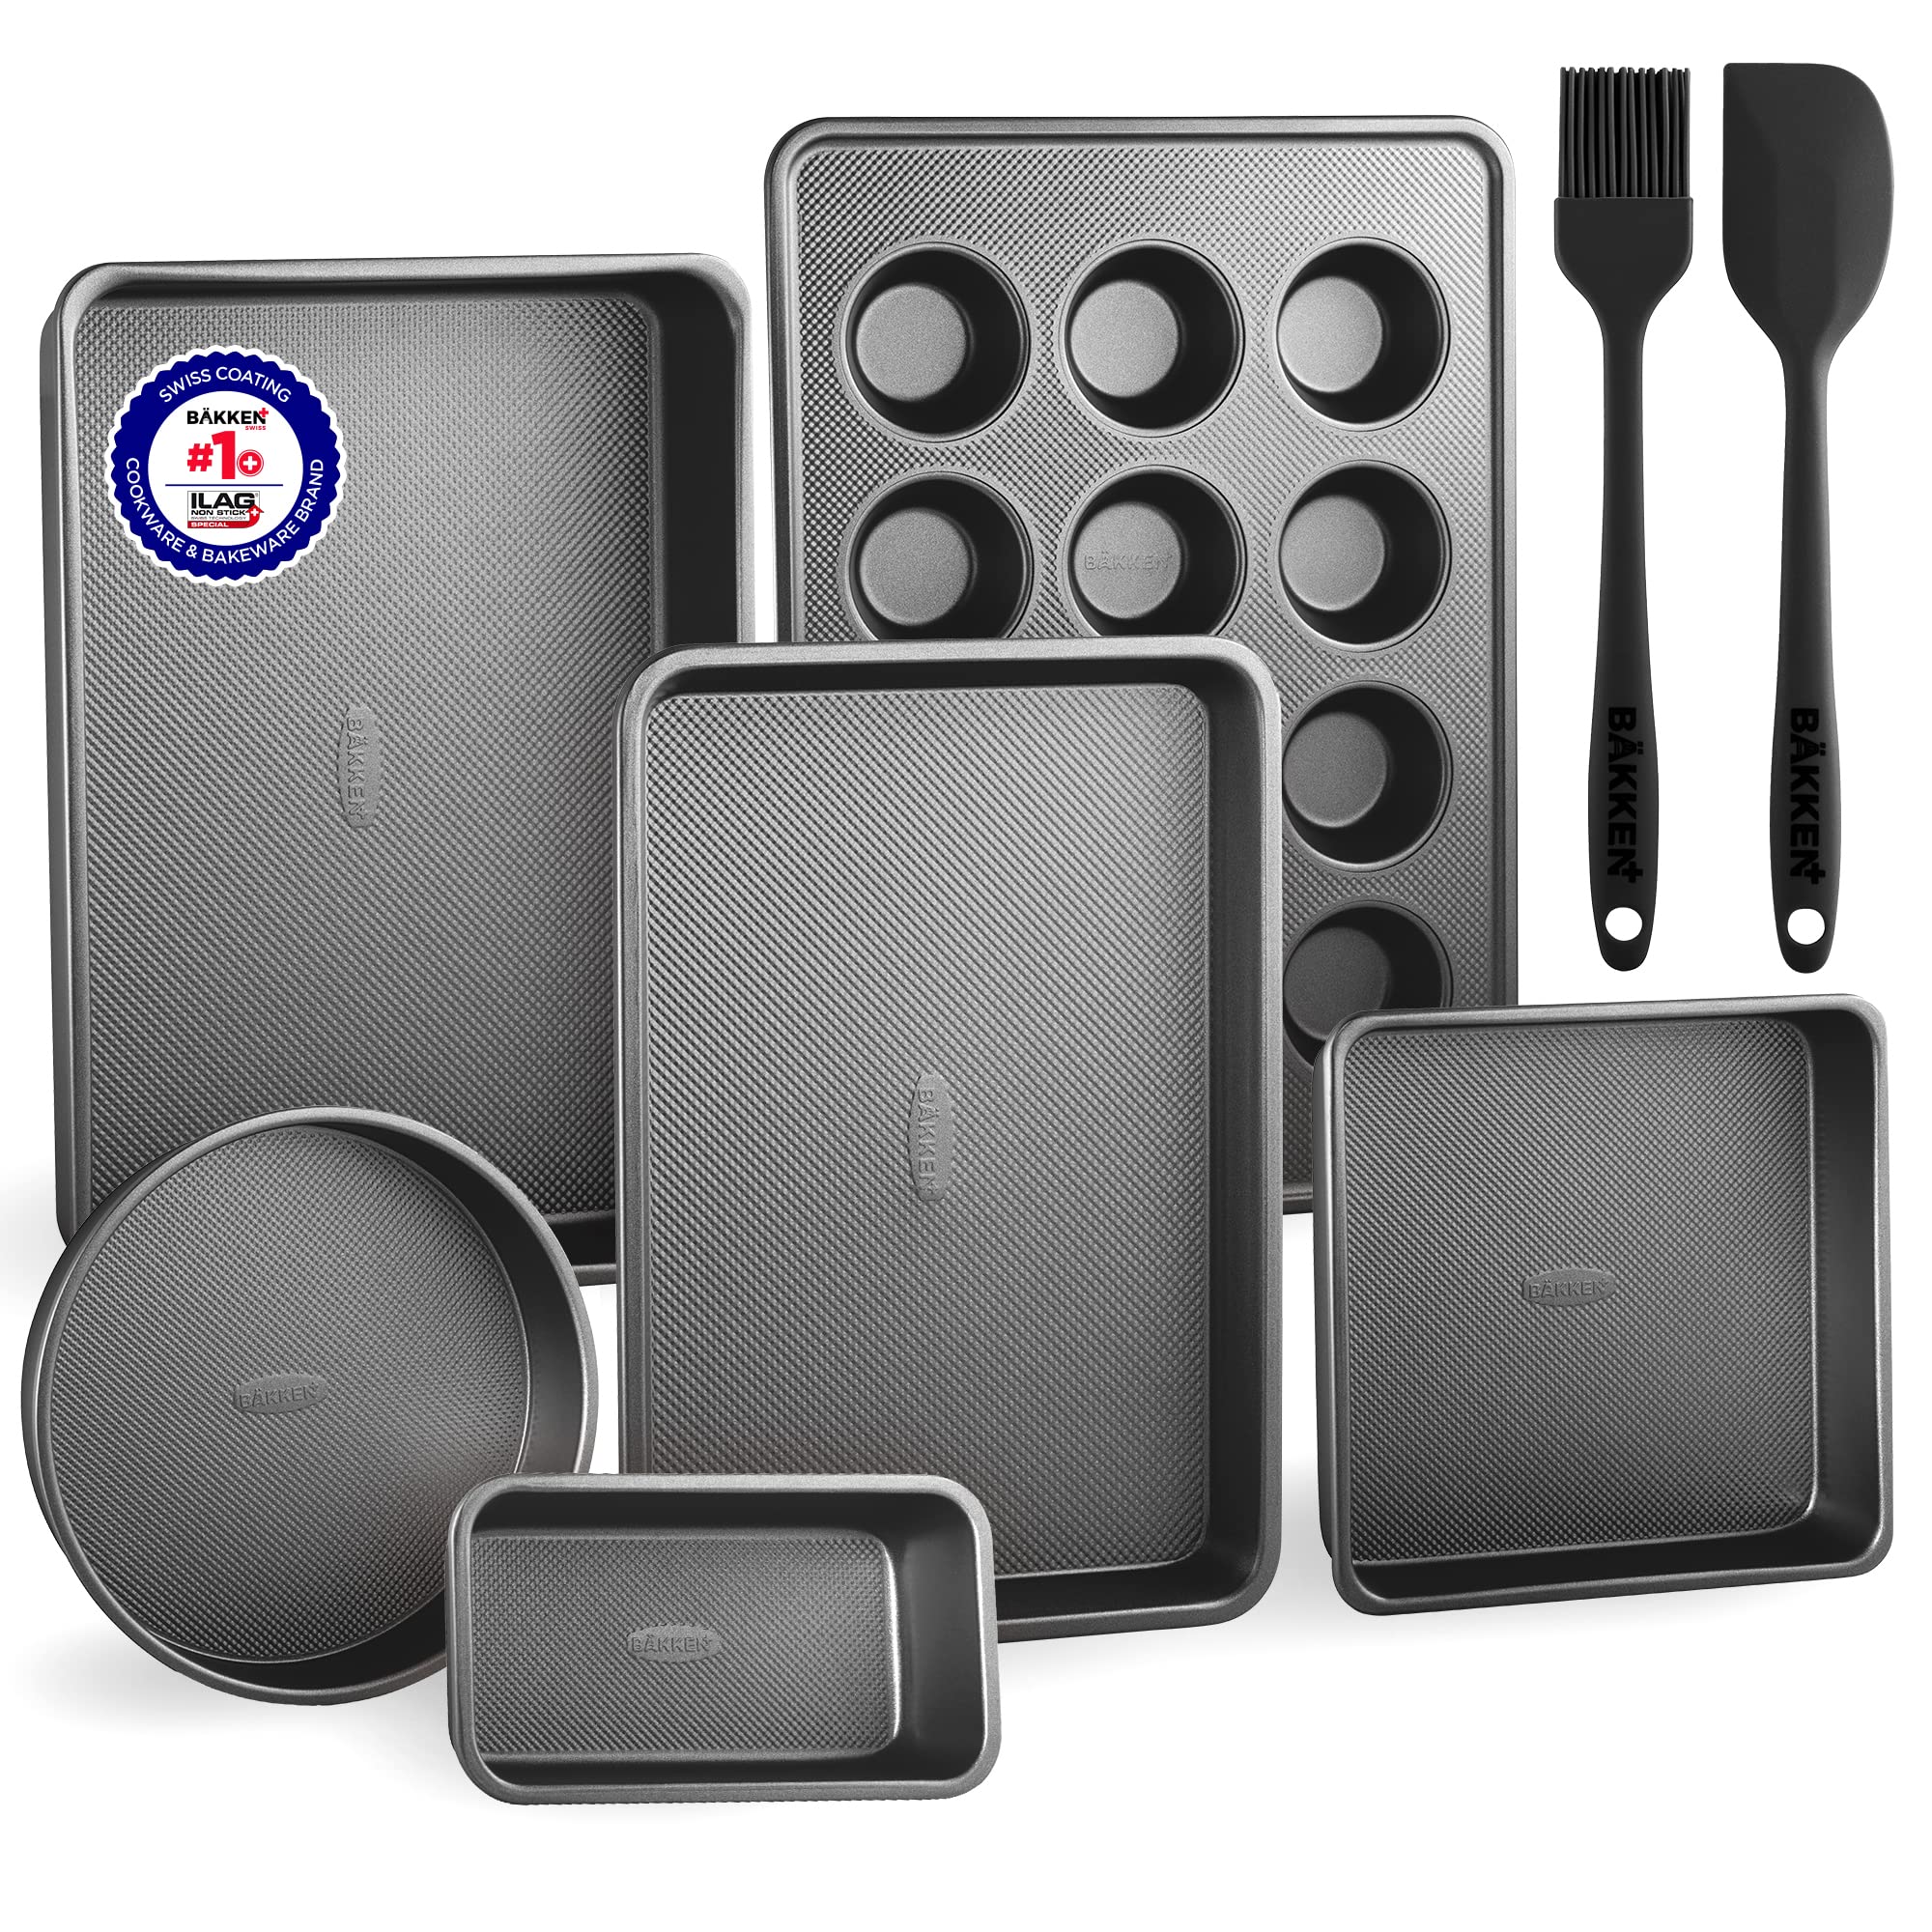 Bakeware Set – 8 Piece – Non-Stick Professional Home Bakeware – Multi Sized Baking Pan Set - Muffin Pan, Loaf Pan and More – Black